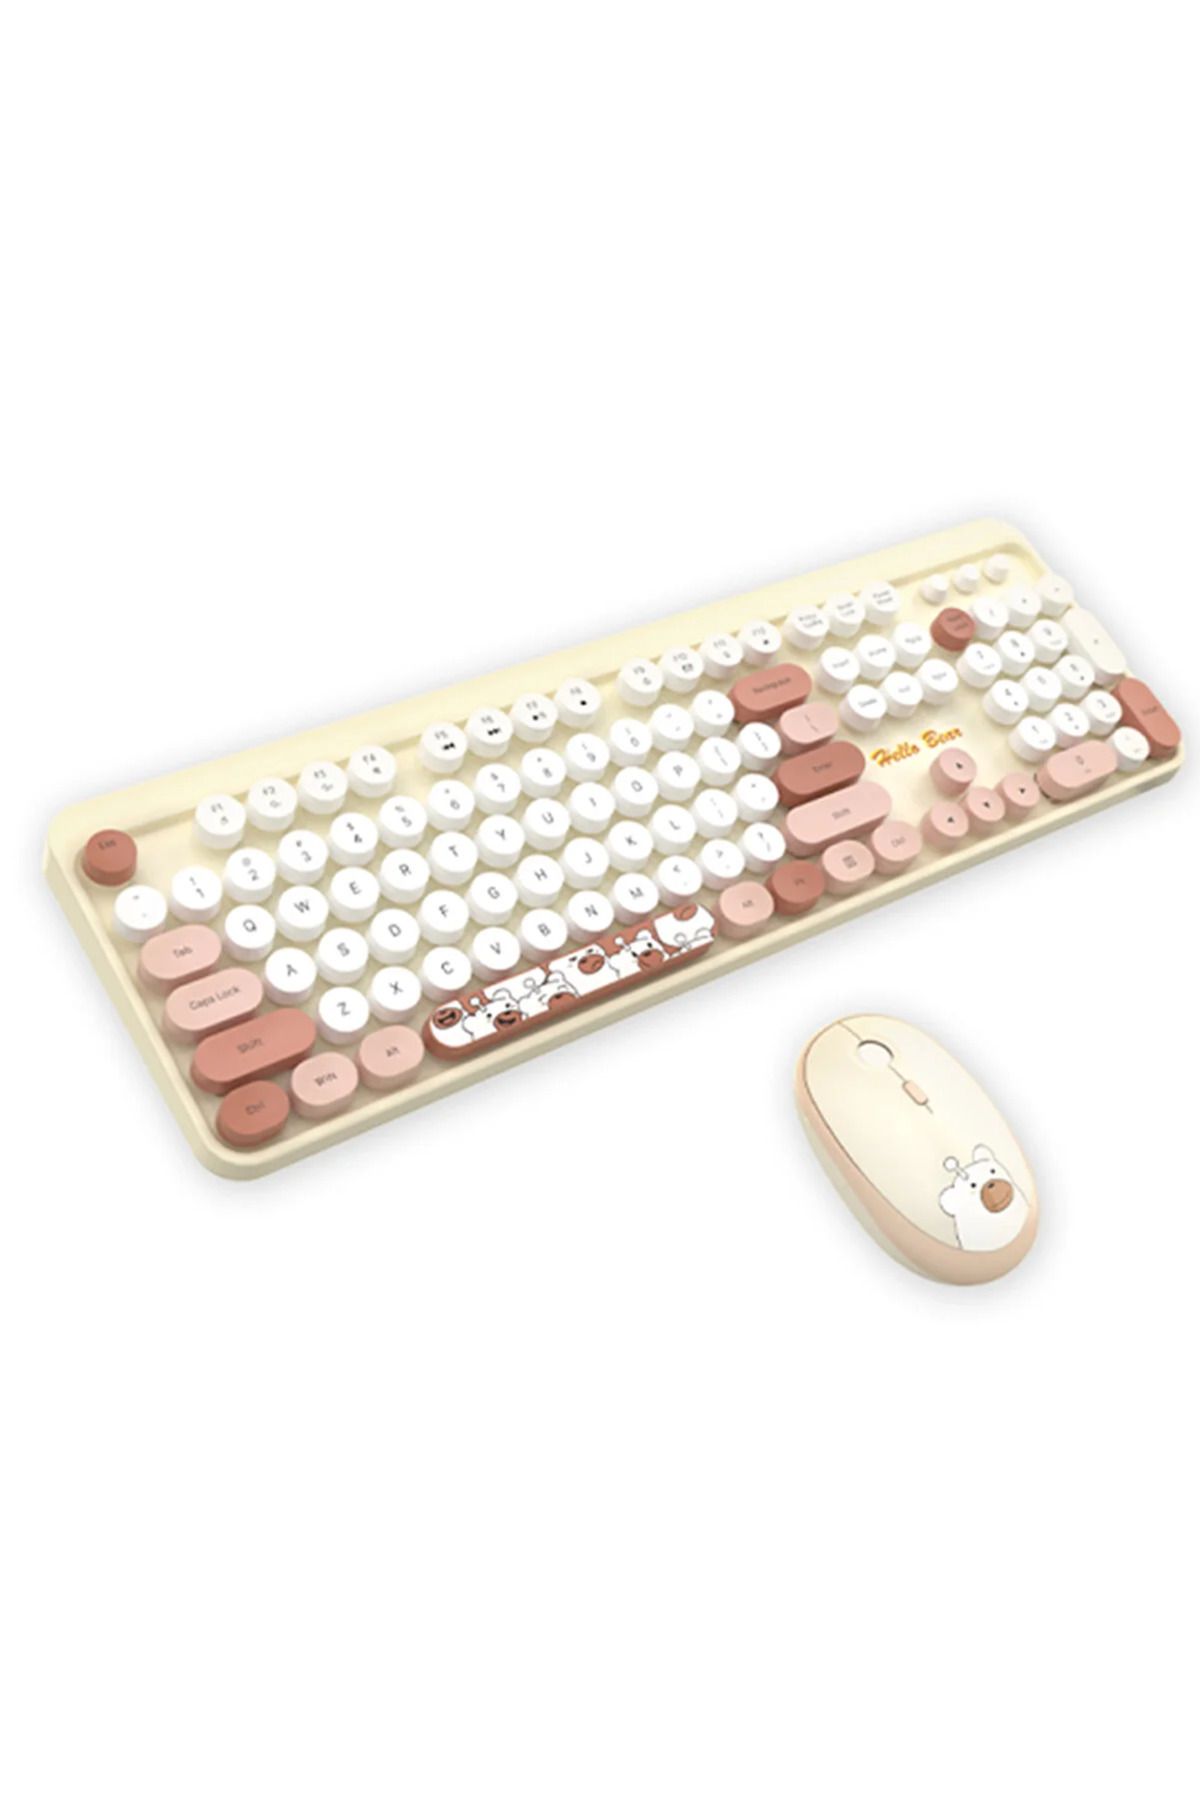 SNEXPRES Klavye Mouse  Ayıcık Desenli Kablosuz Renkli Yuvarlak Tuşlu Klavye Mouse Set